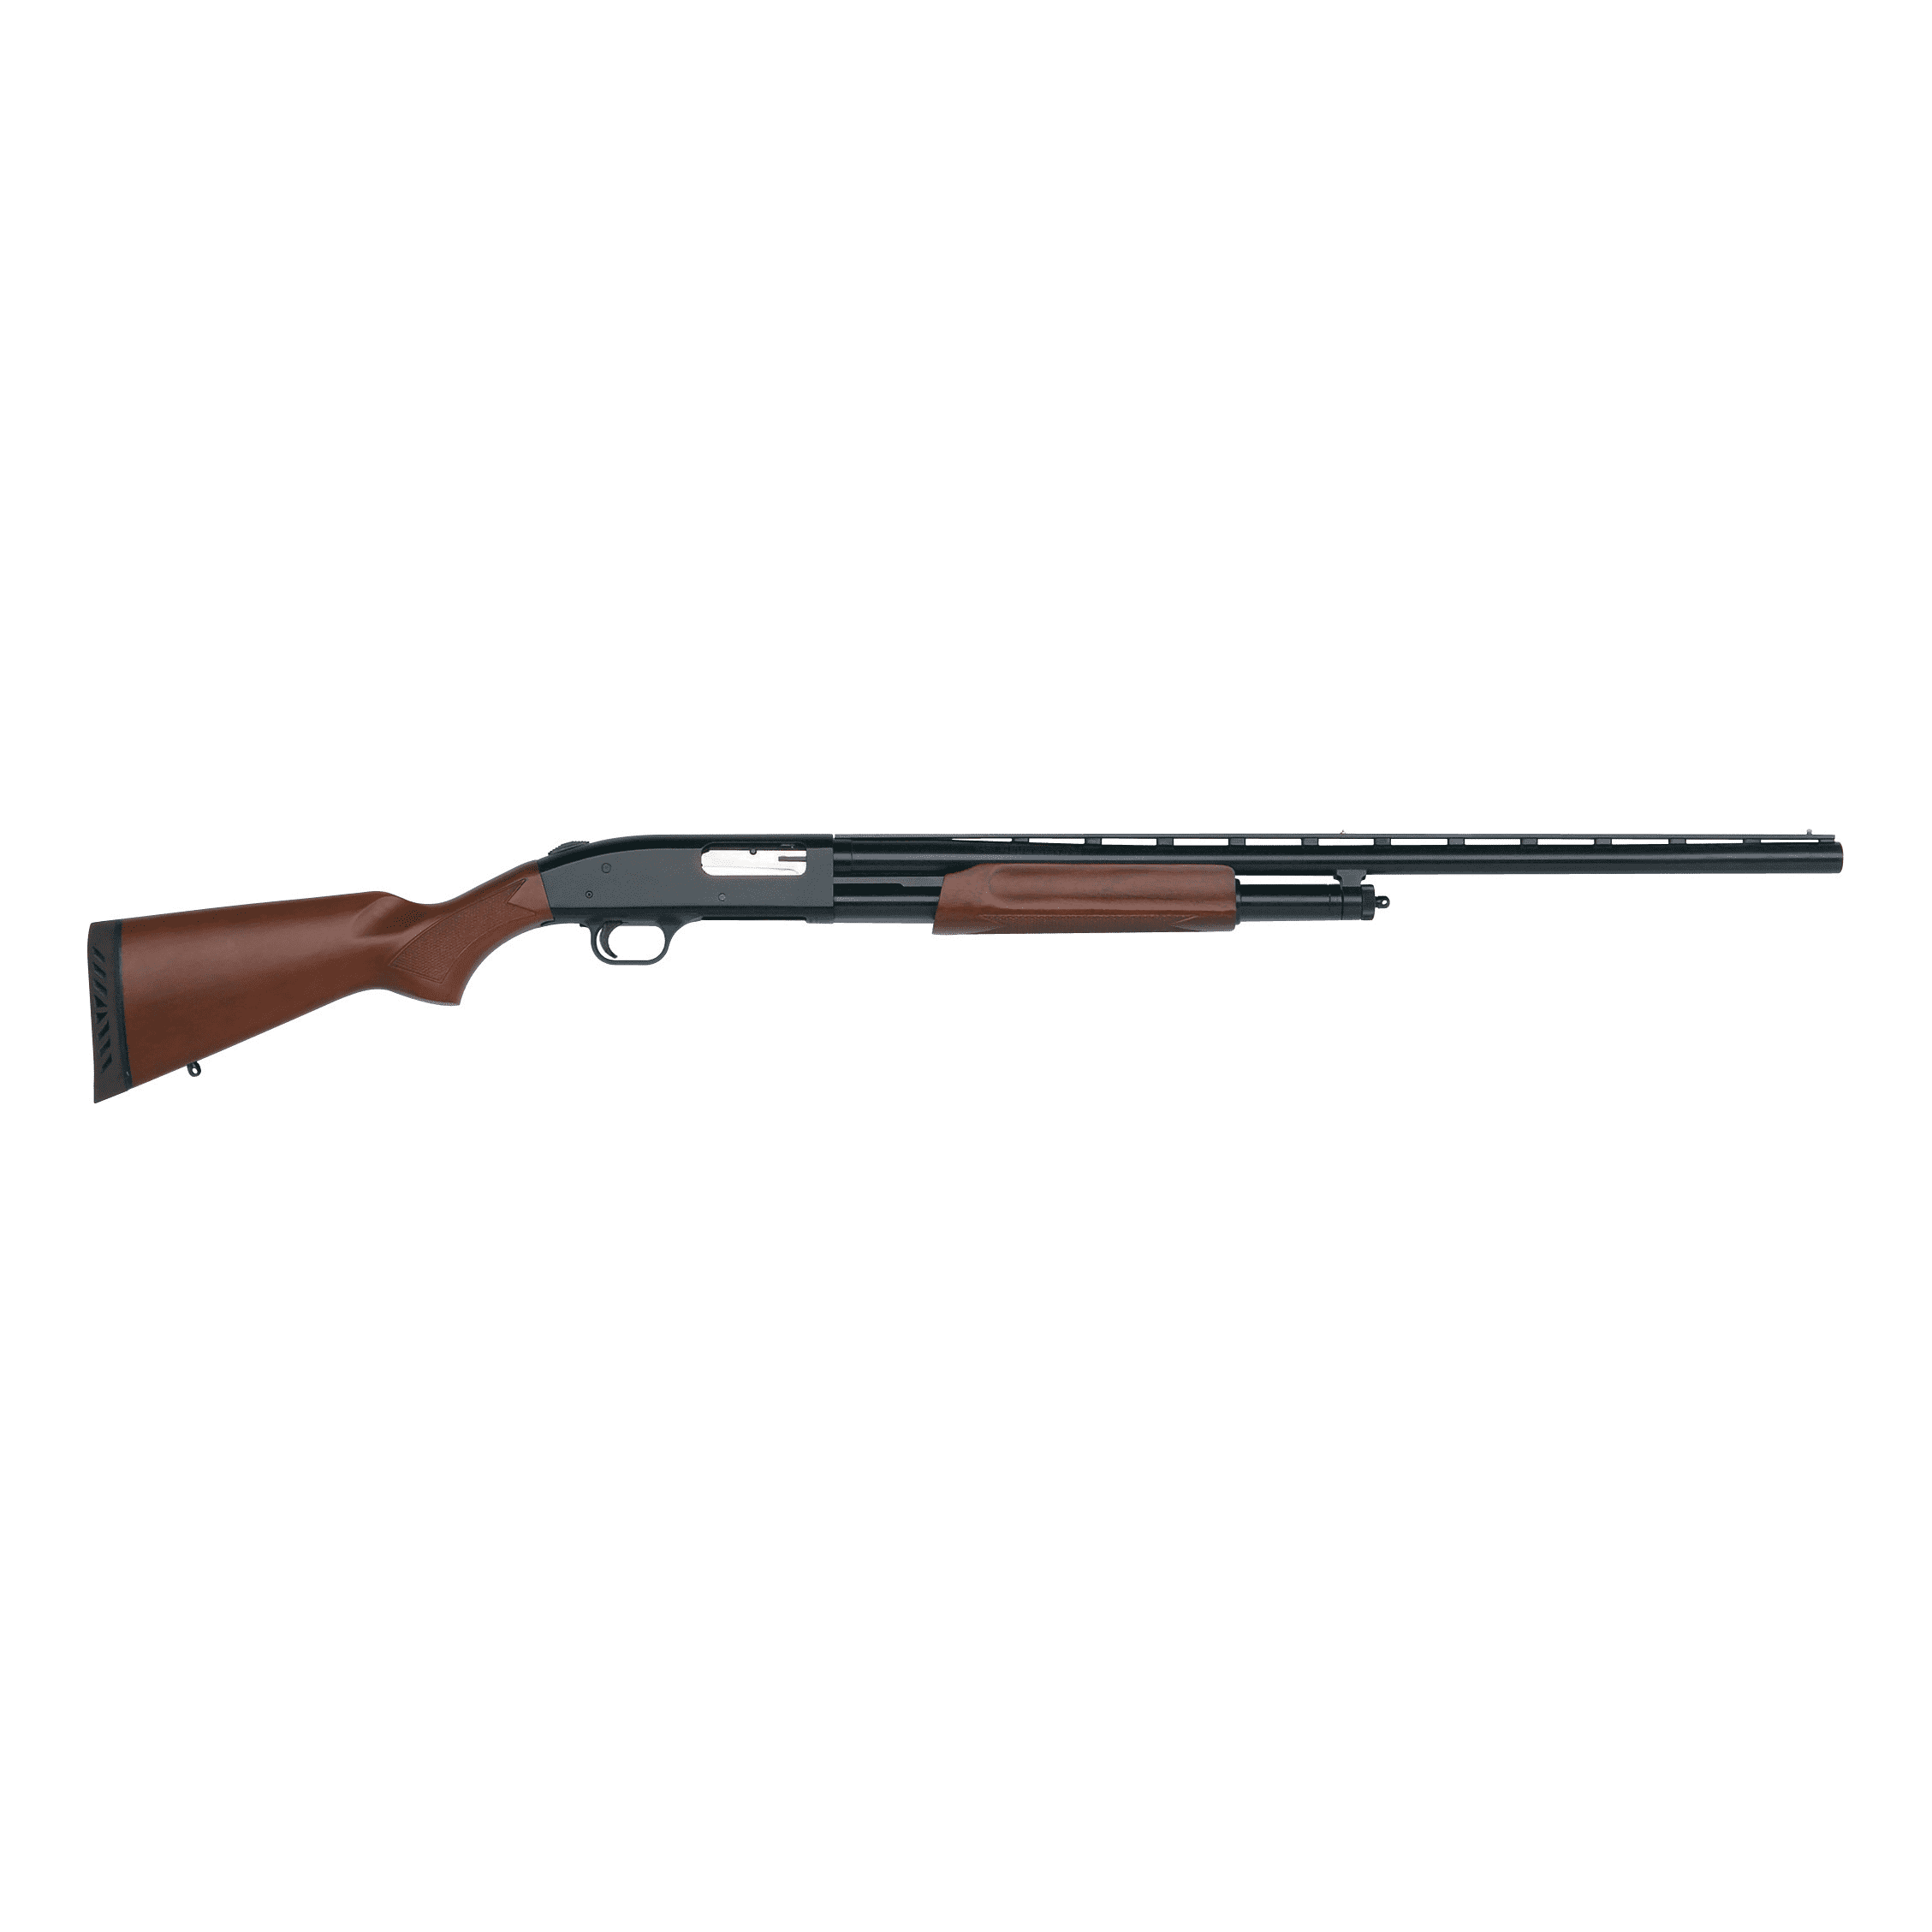 Remington 16 Gauge 2-3/4 SP16RS Slugger 4/5 oz Rifled Slug 5 per box